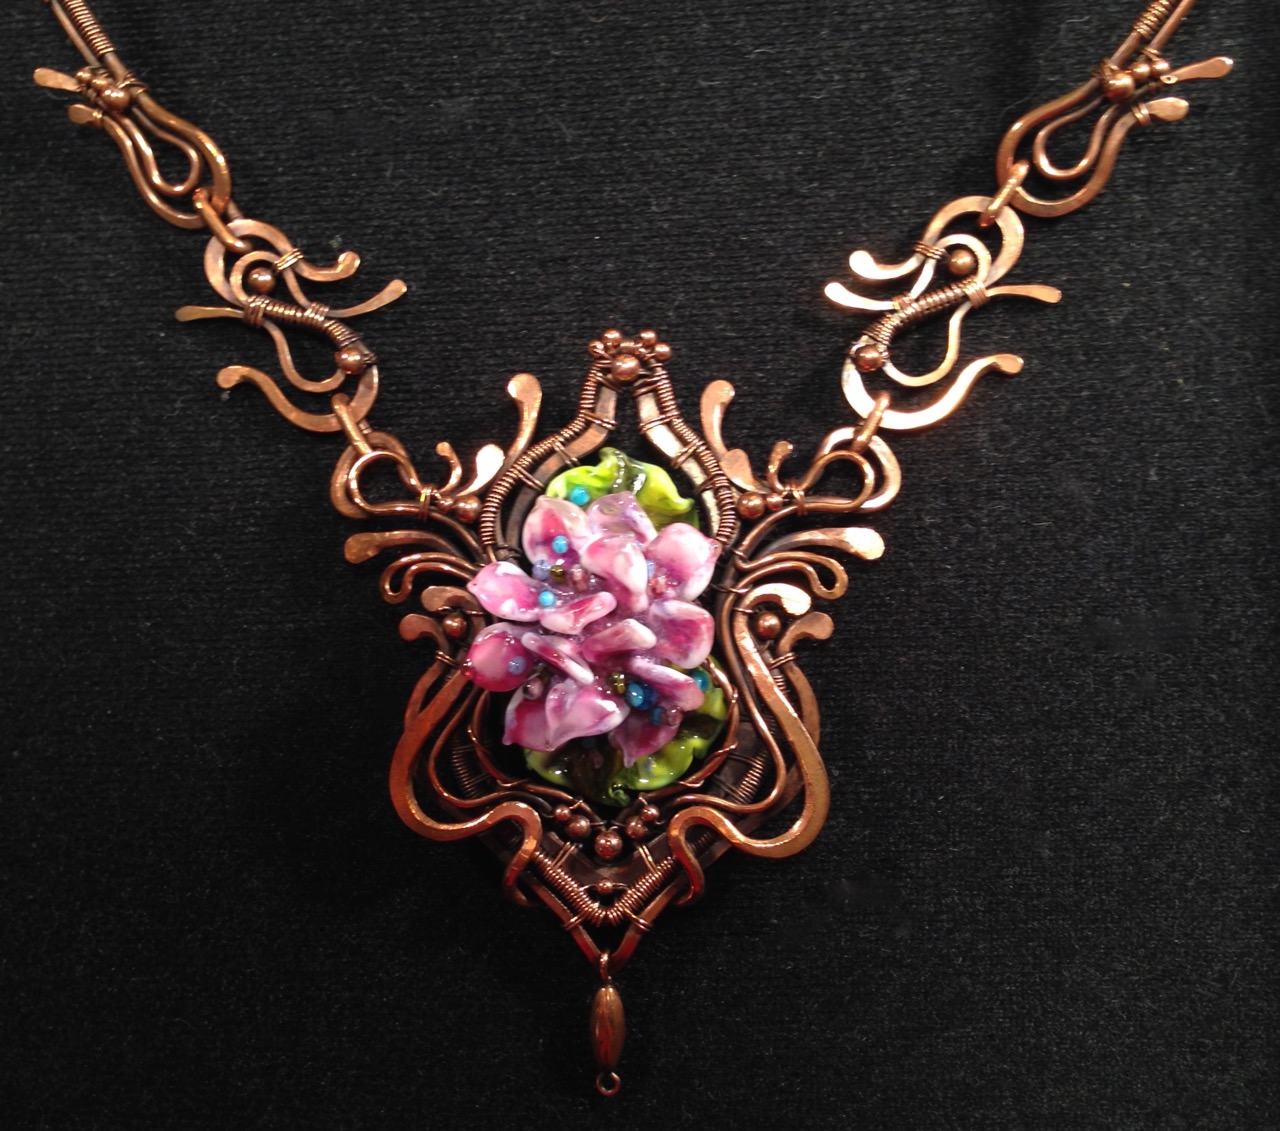 Glass hydrangea pendant with copper wire with art nouveau influences